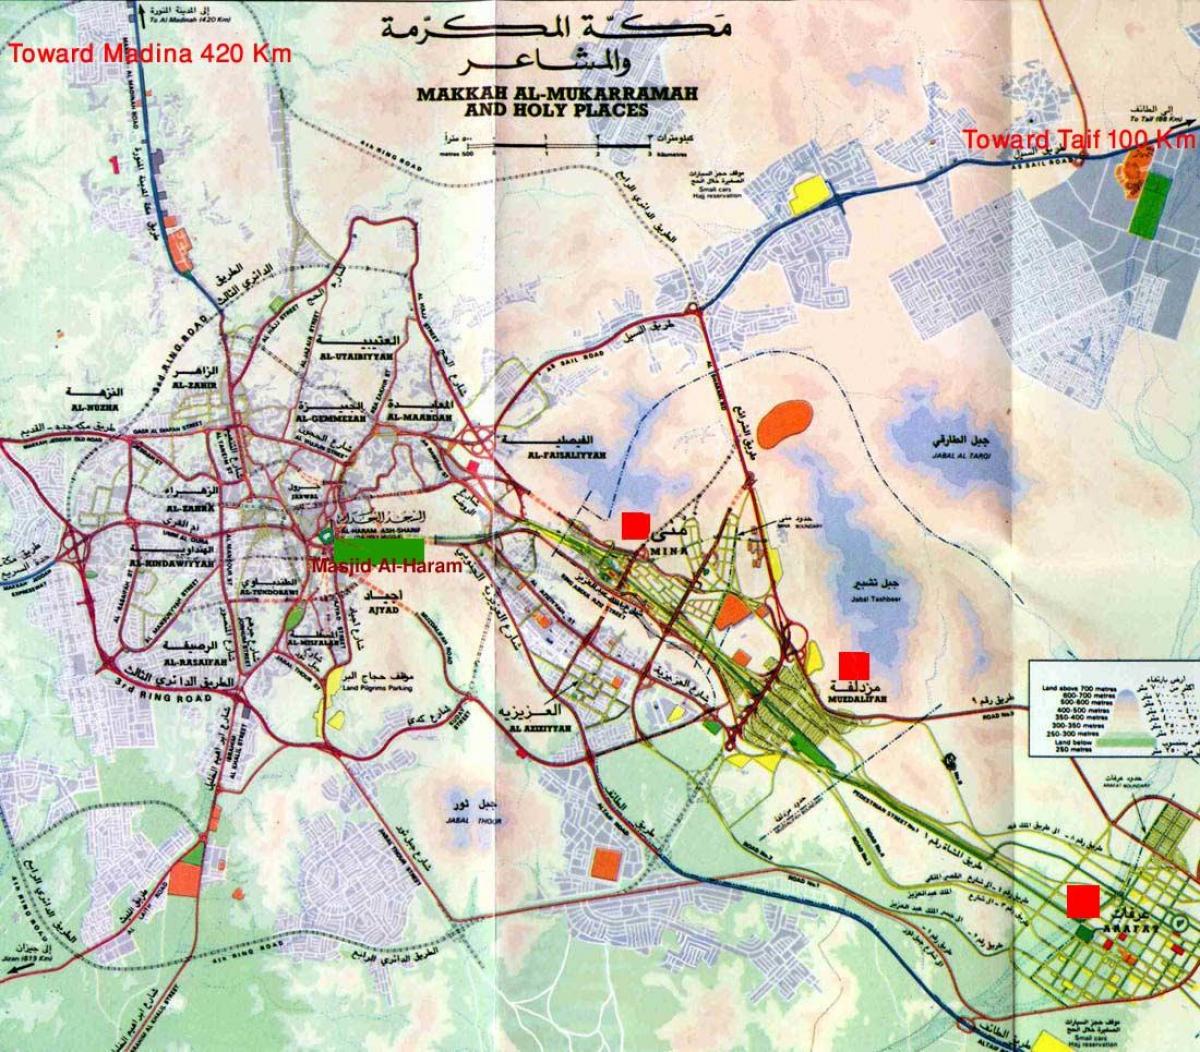 Makkah харам sharif мапа